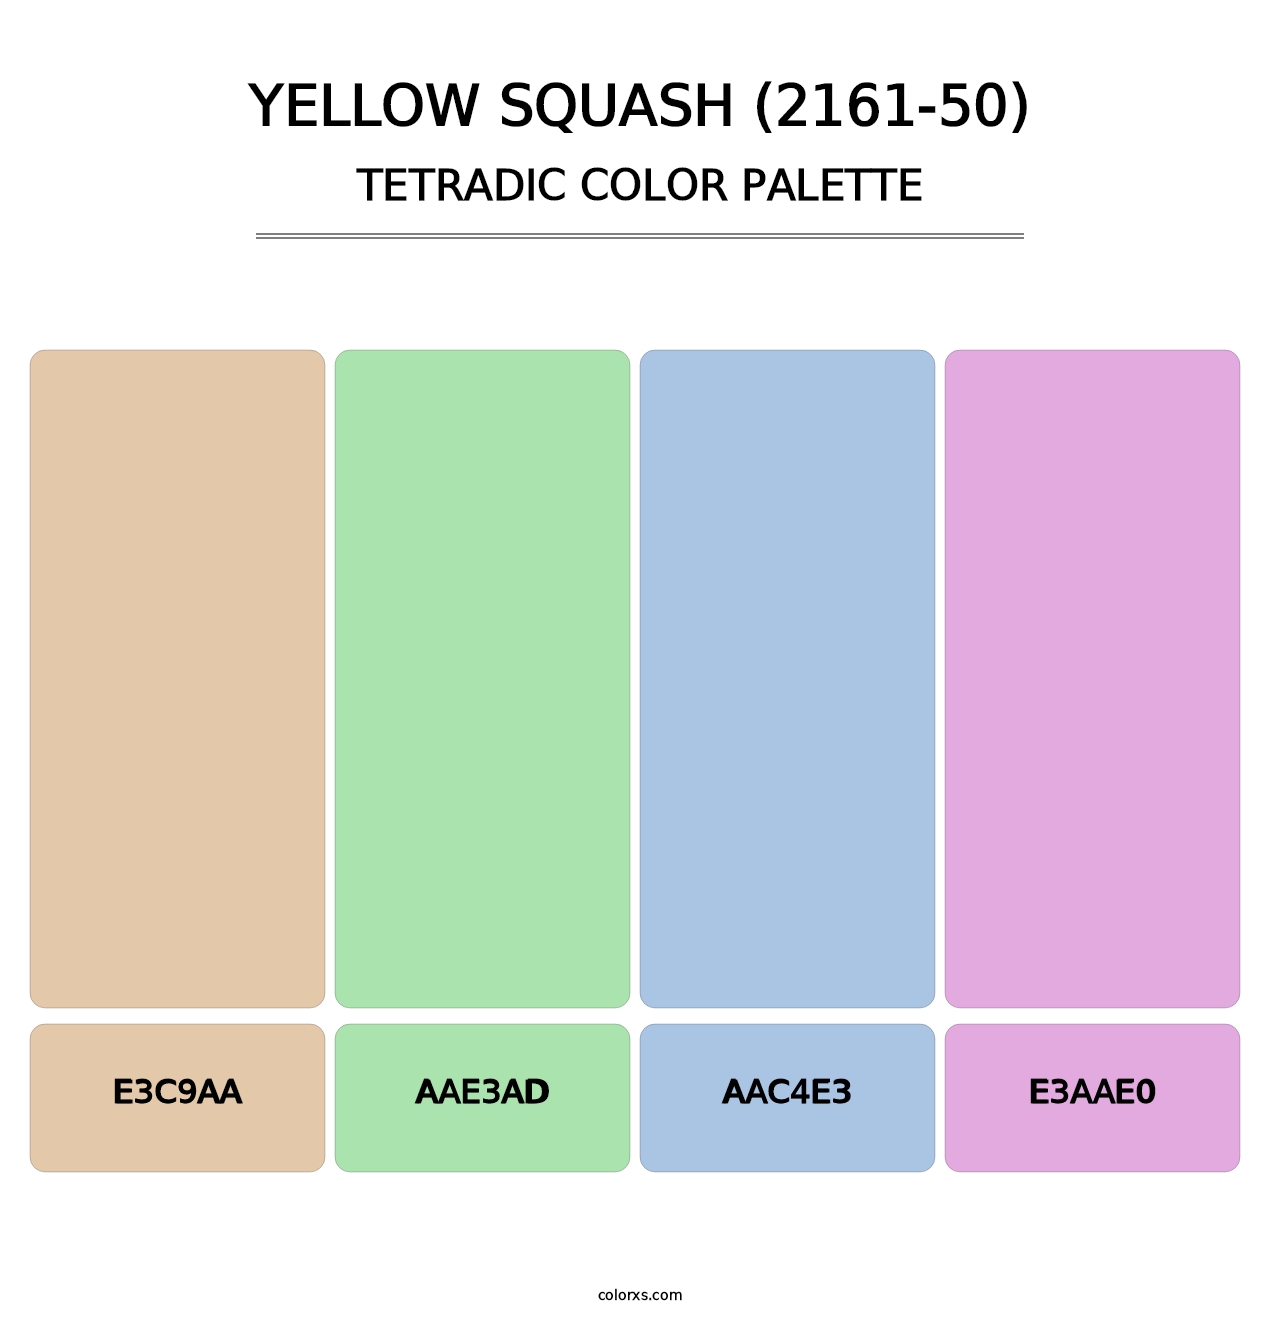 Yellow Squash (2161-50) - Tetradic Color Palette